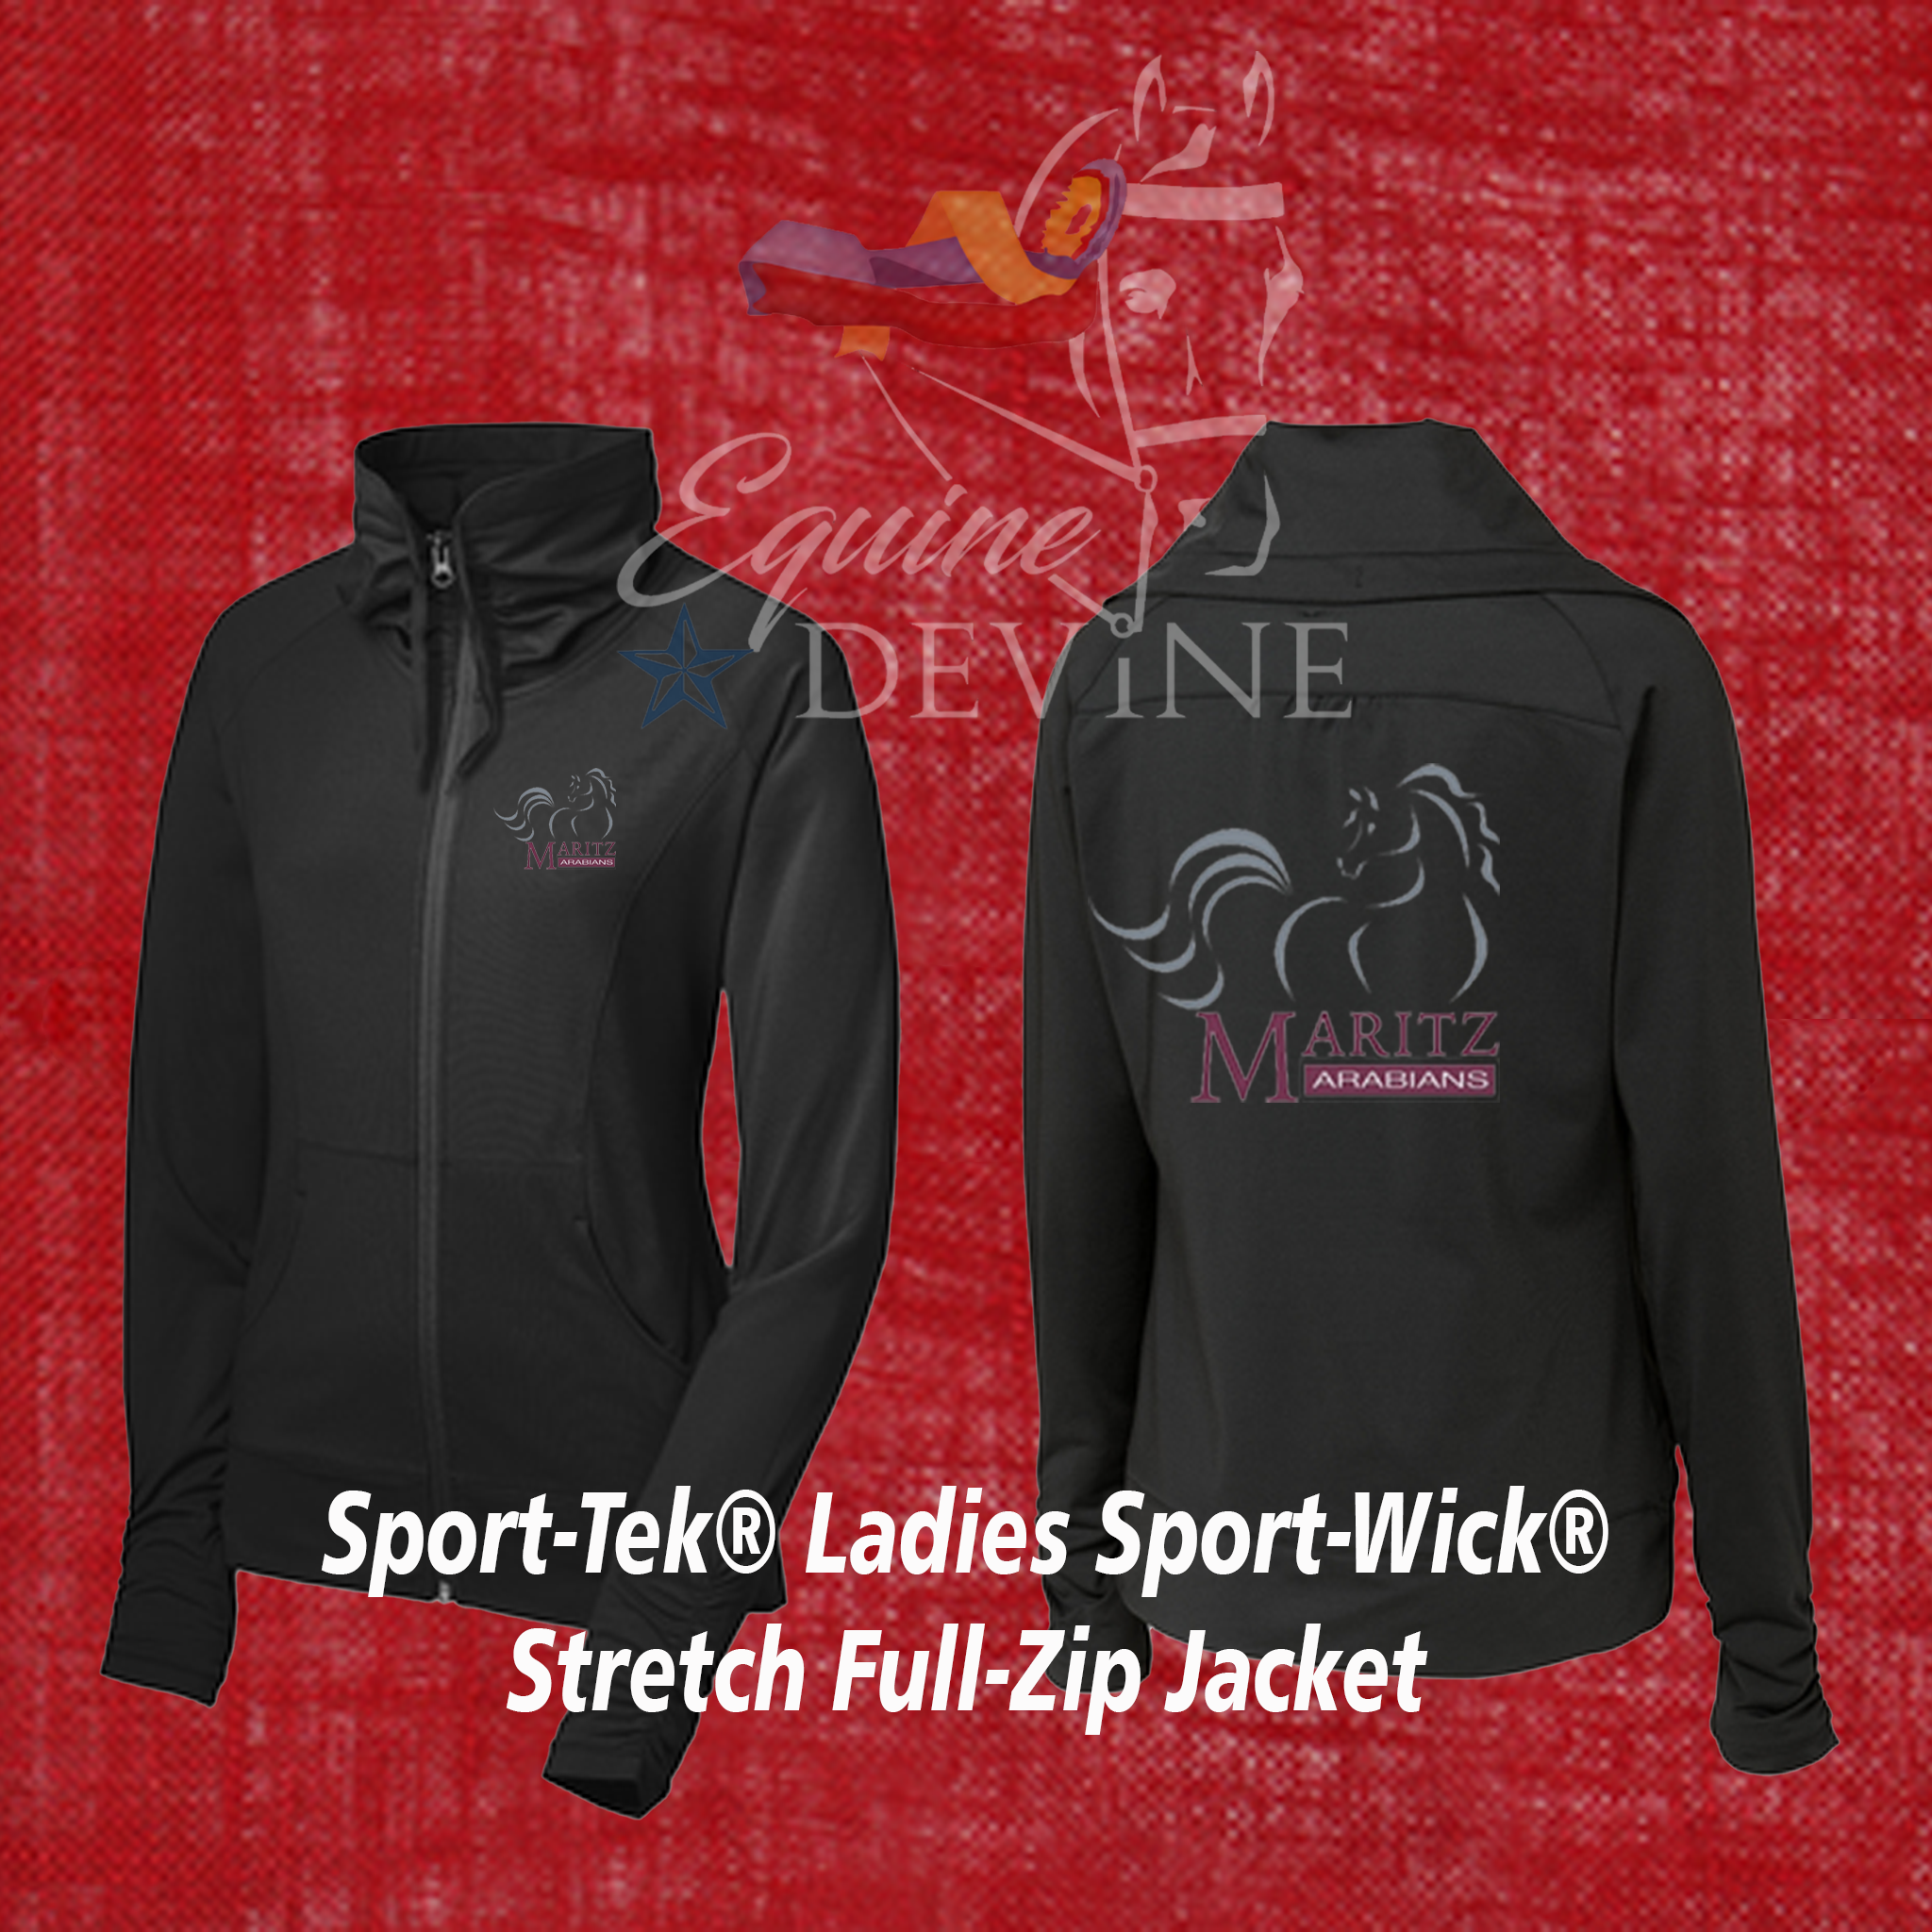 Maritz Arabians Official Embroidered Sport-Tek® Ladies Sport-Wick® Stretch Full-Zip Jacket